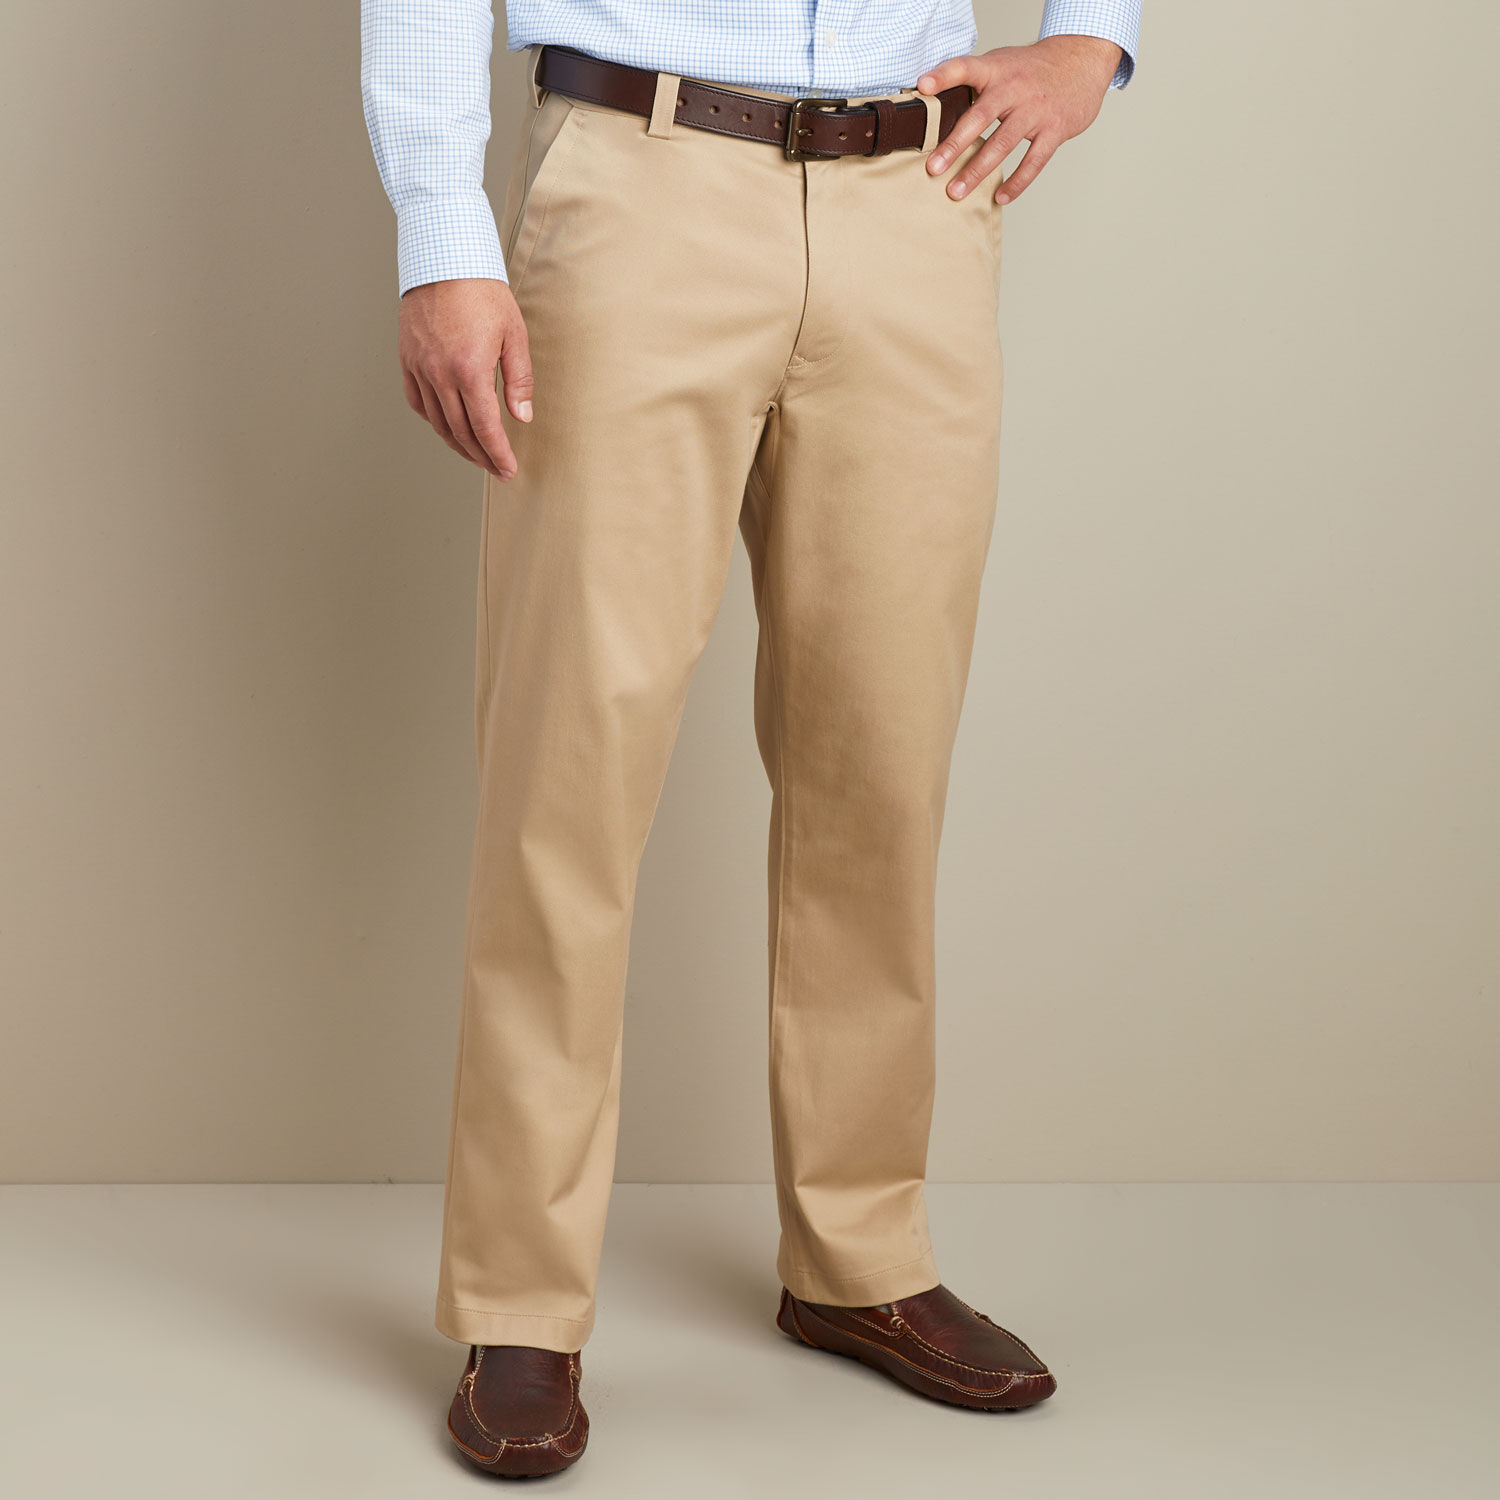 Orvis Men's Wrinkle-Free Stretch Chinos Pleated Pants Khaki (Size: 44 x 30)  NWT | eBay